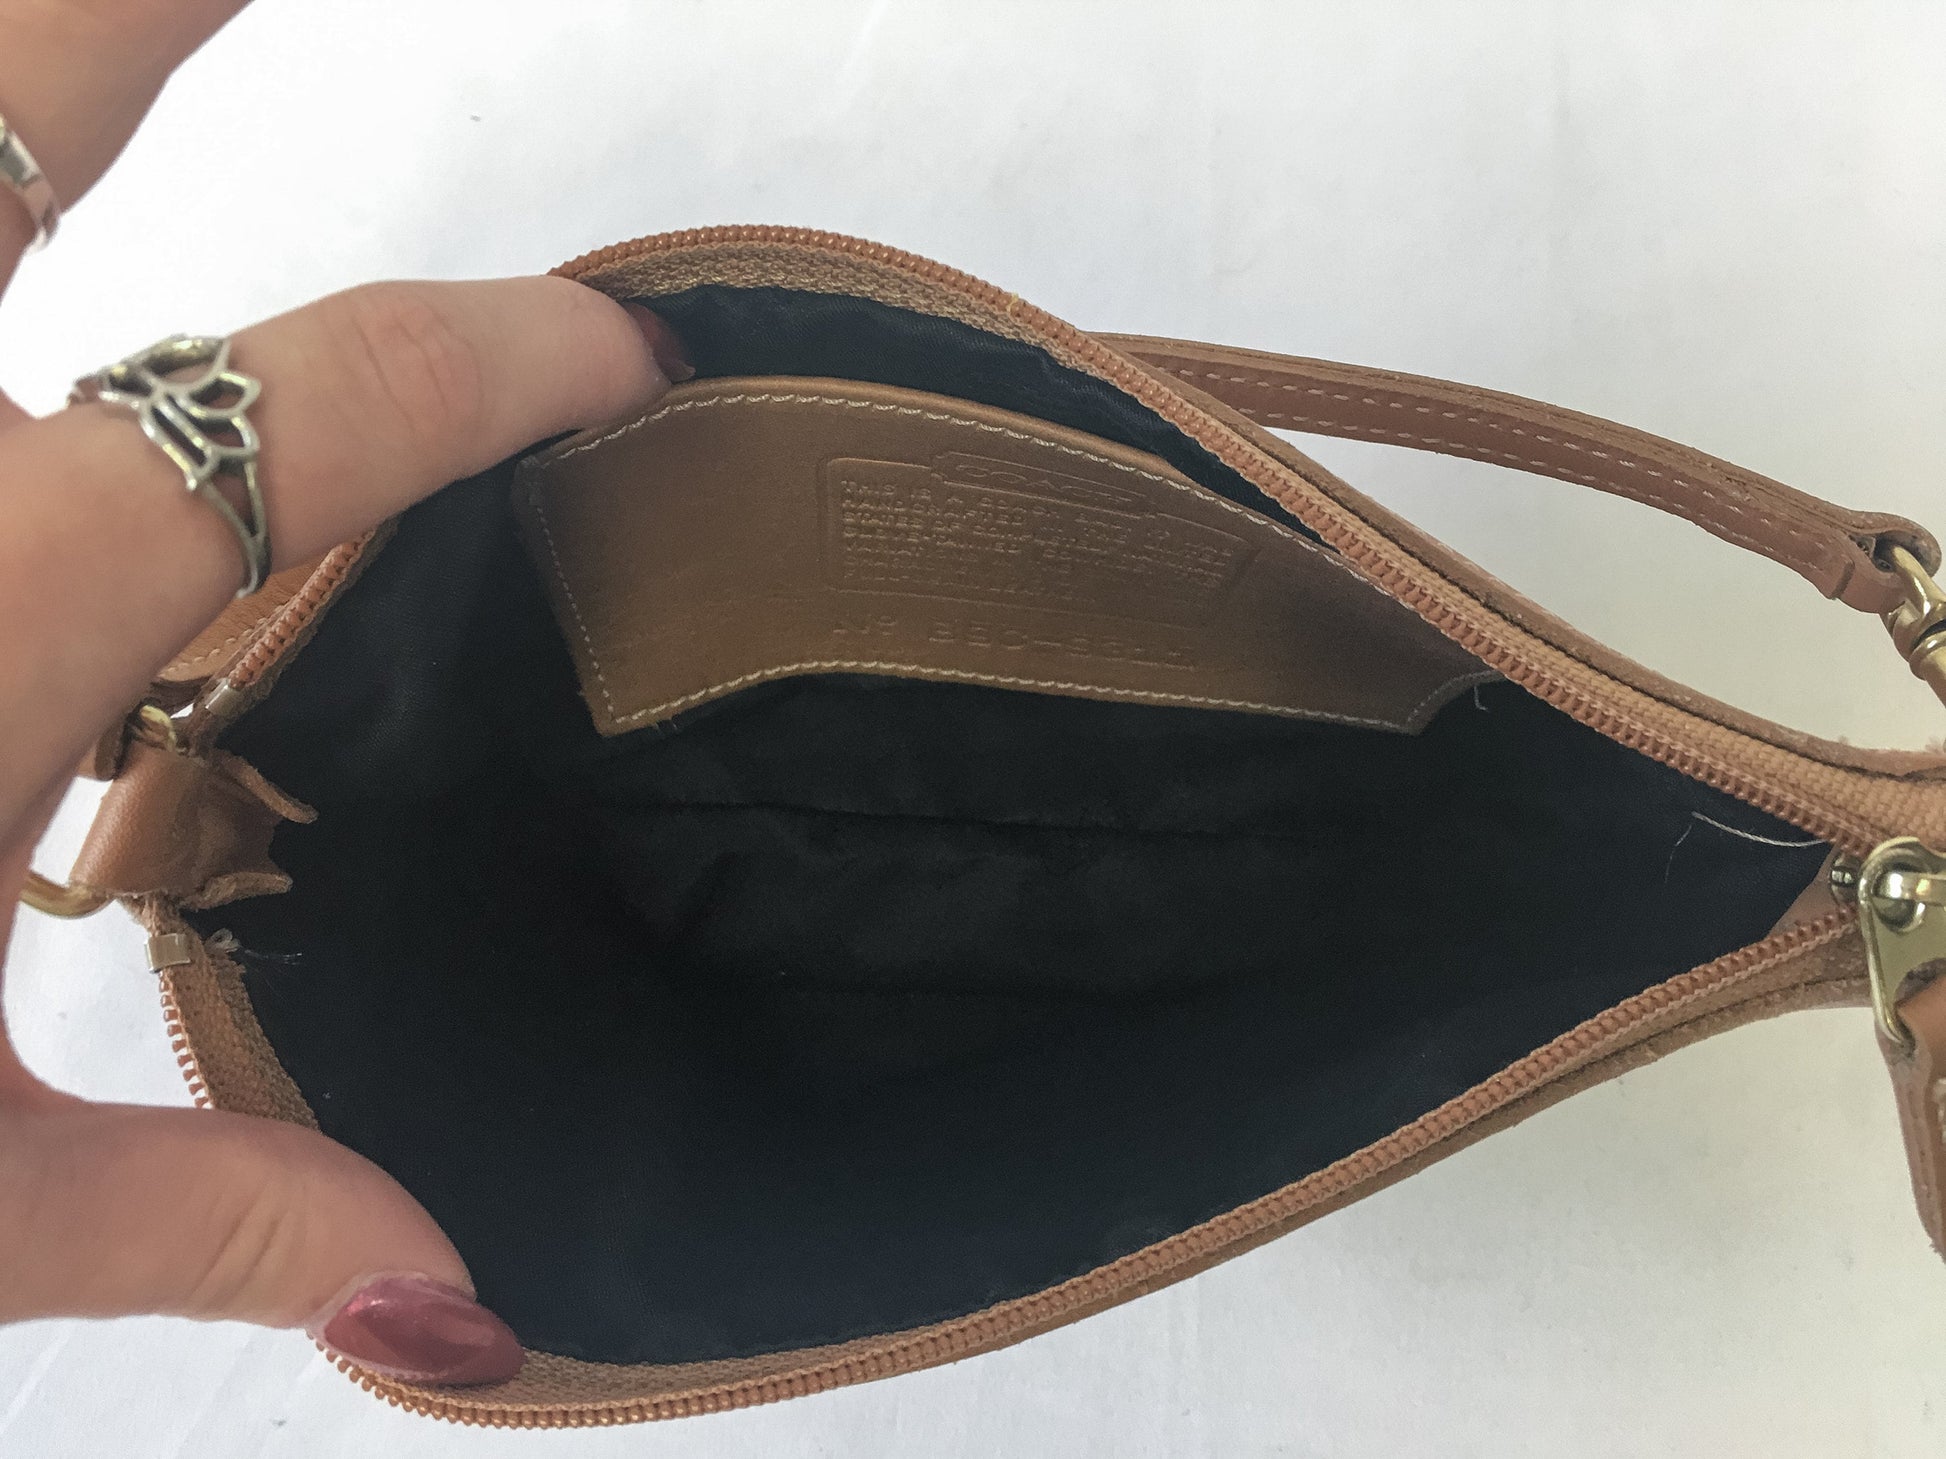 Vintage COACH Leather Bleeker 9311 Tan Handbag, Vintage Coach Clutch Wristlet